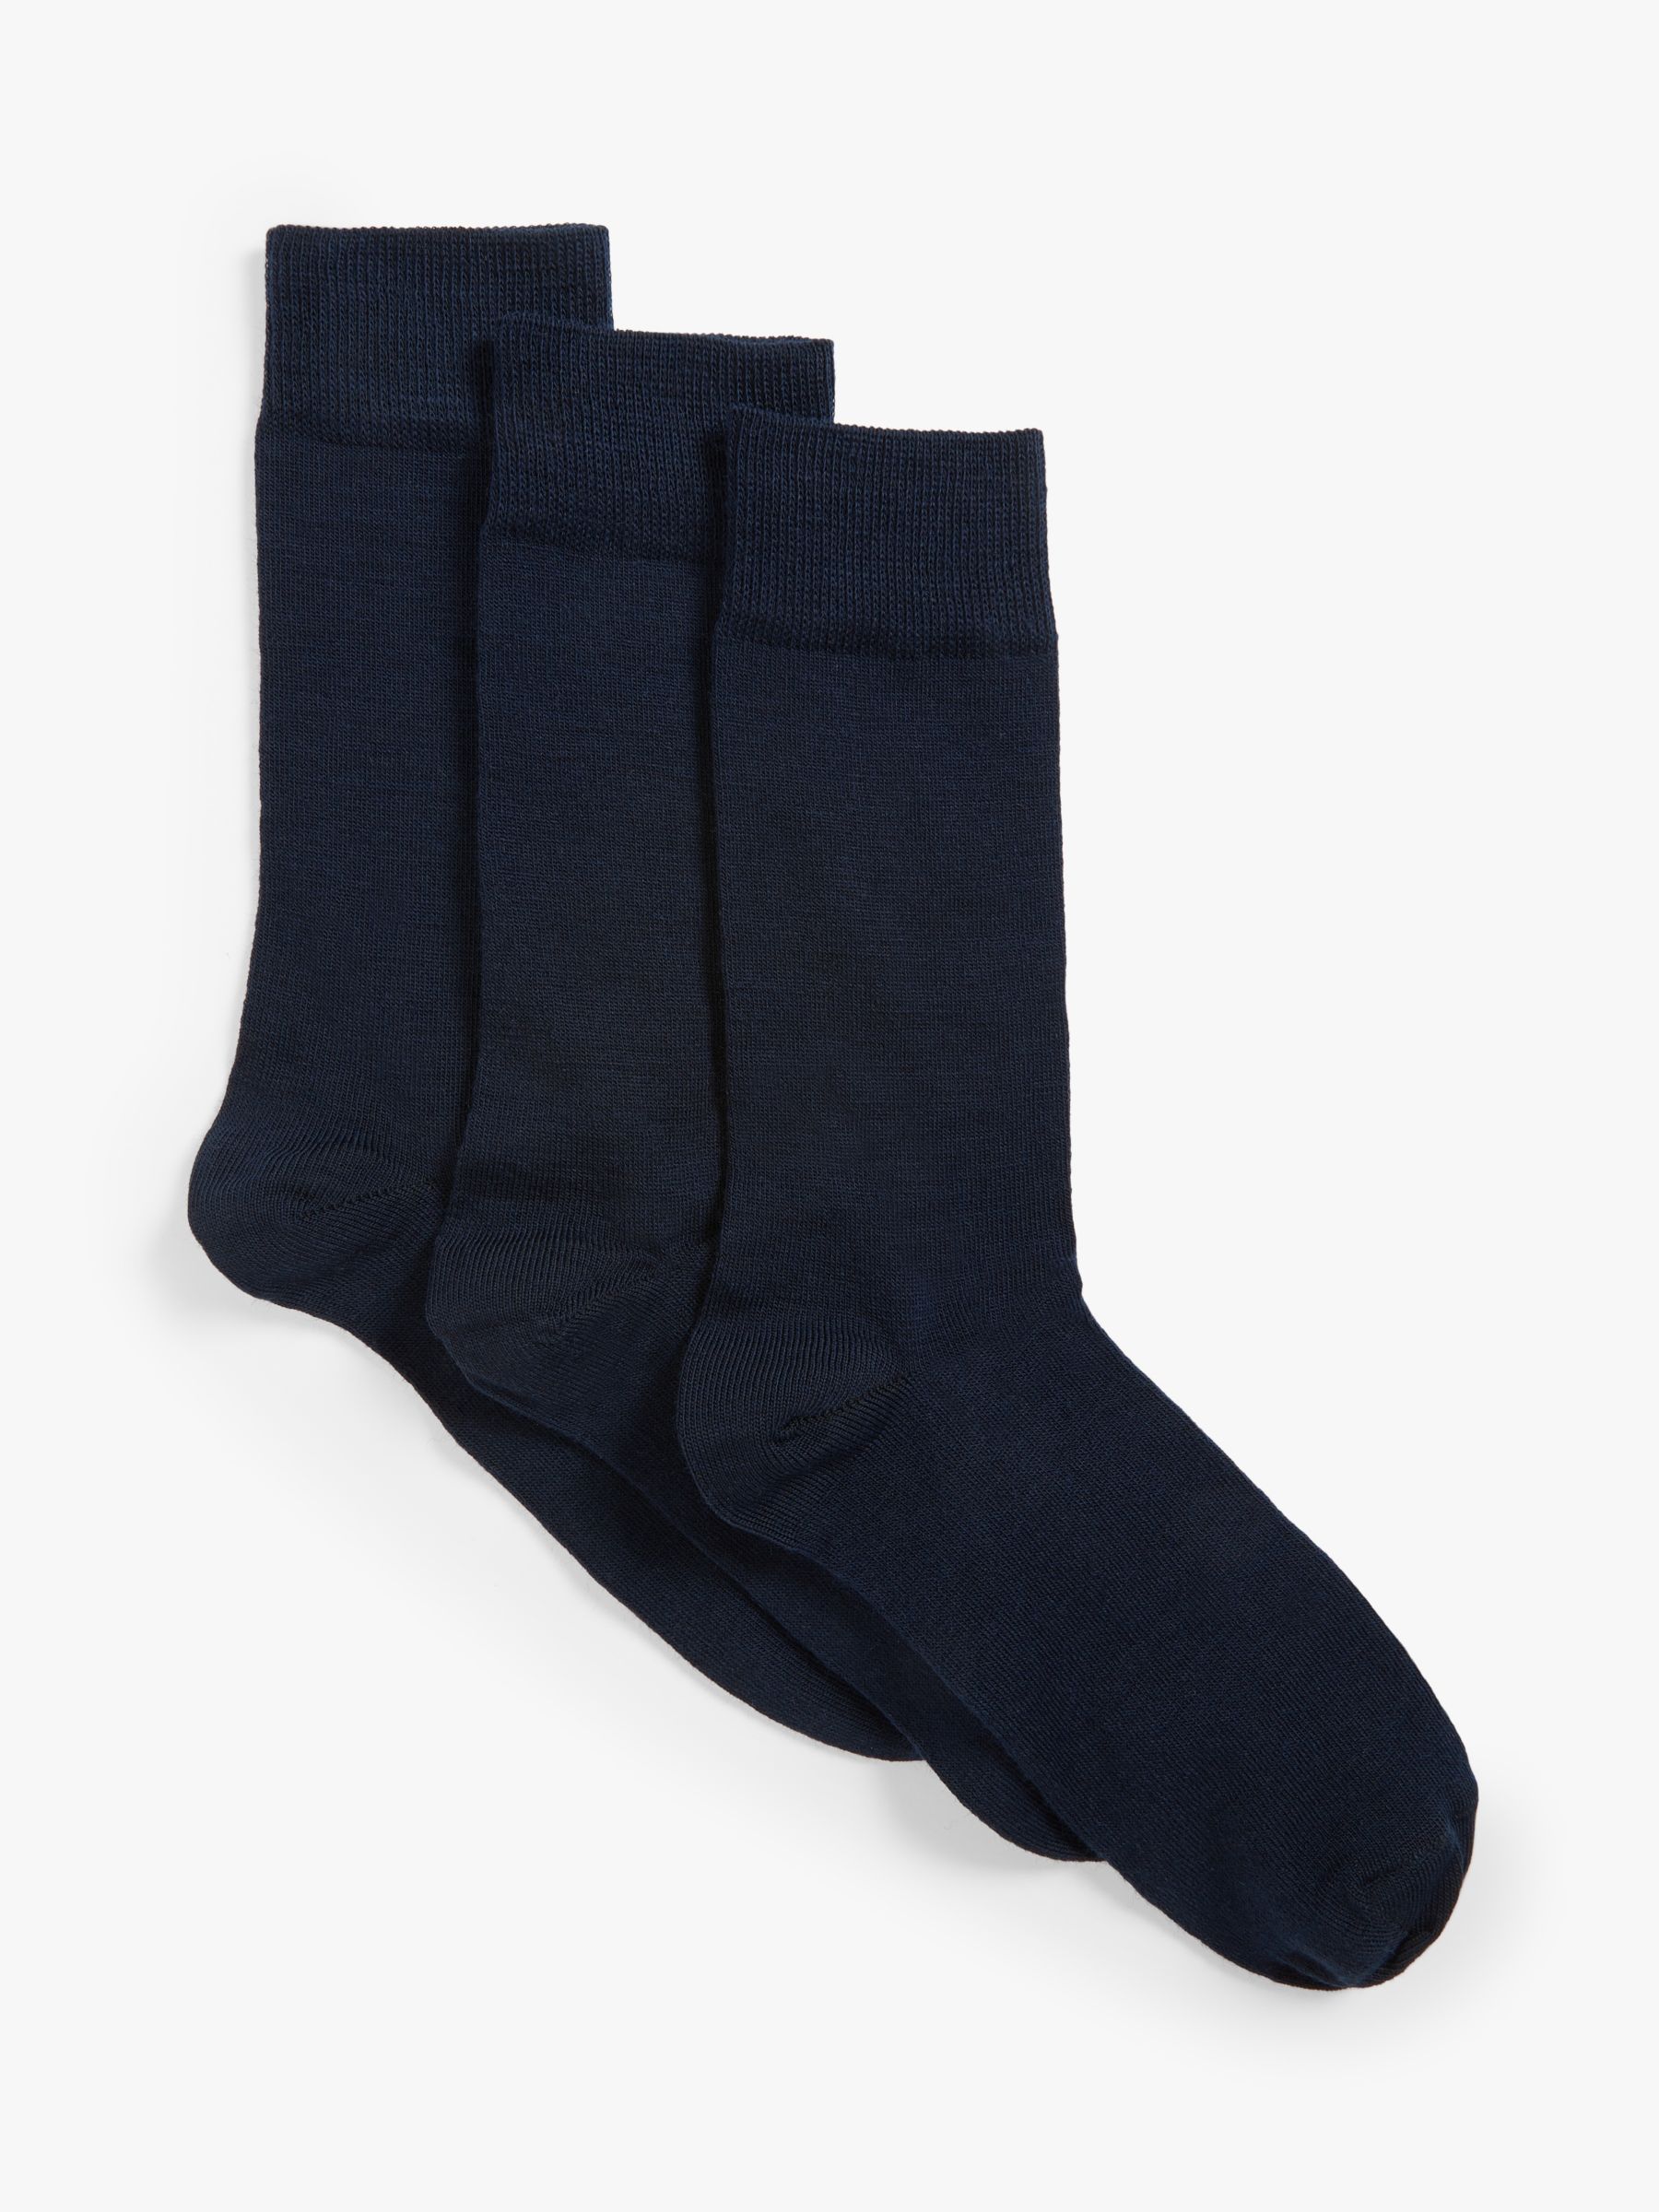 John Lewis Wool Mix Men's Socks, Pack of 3, Navy, S